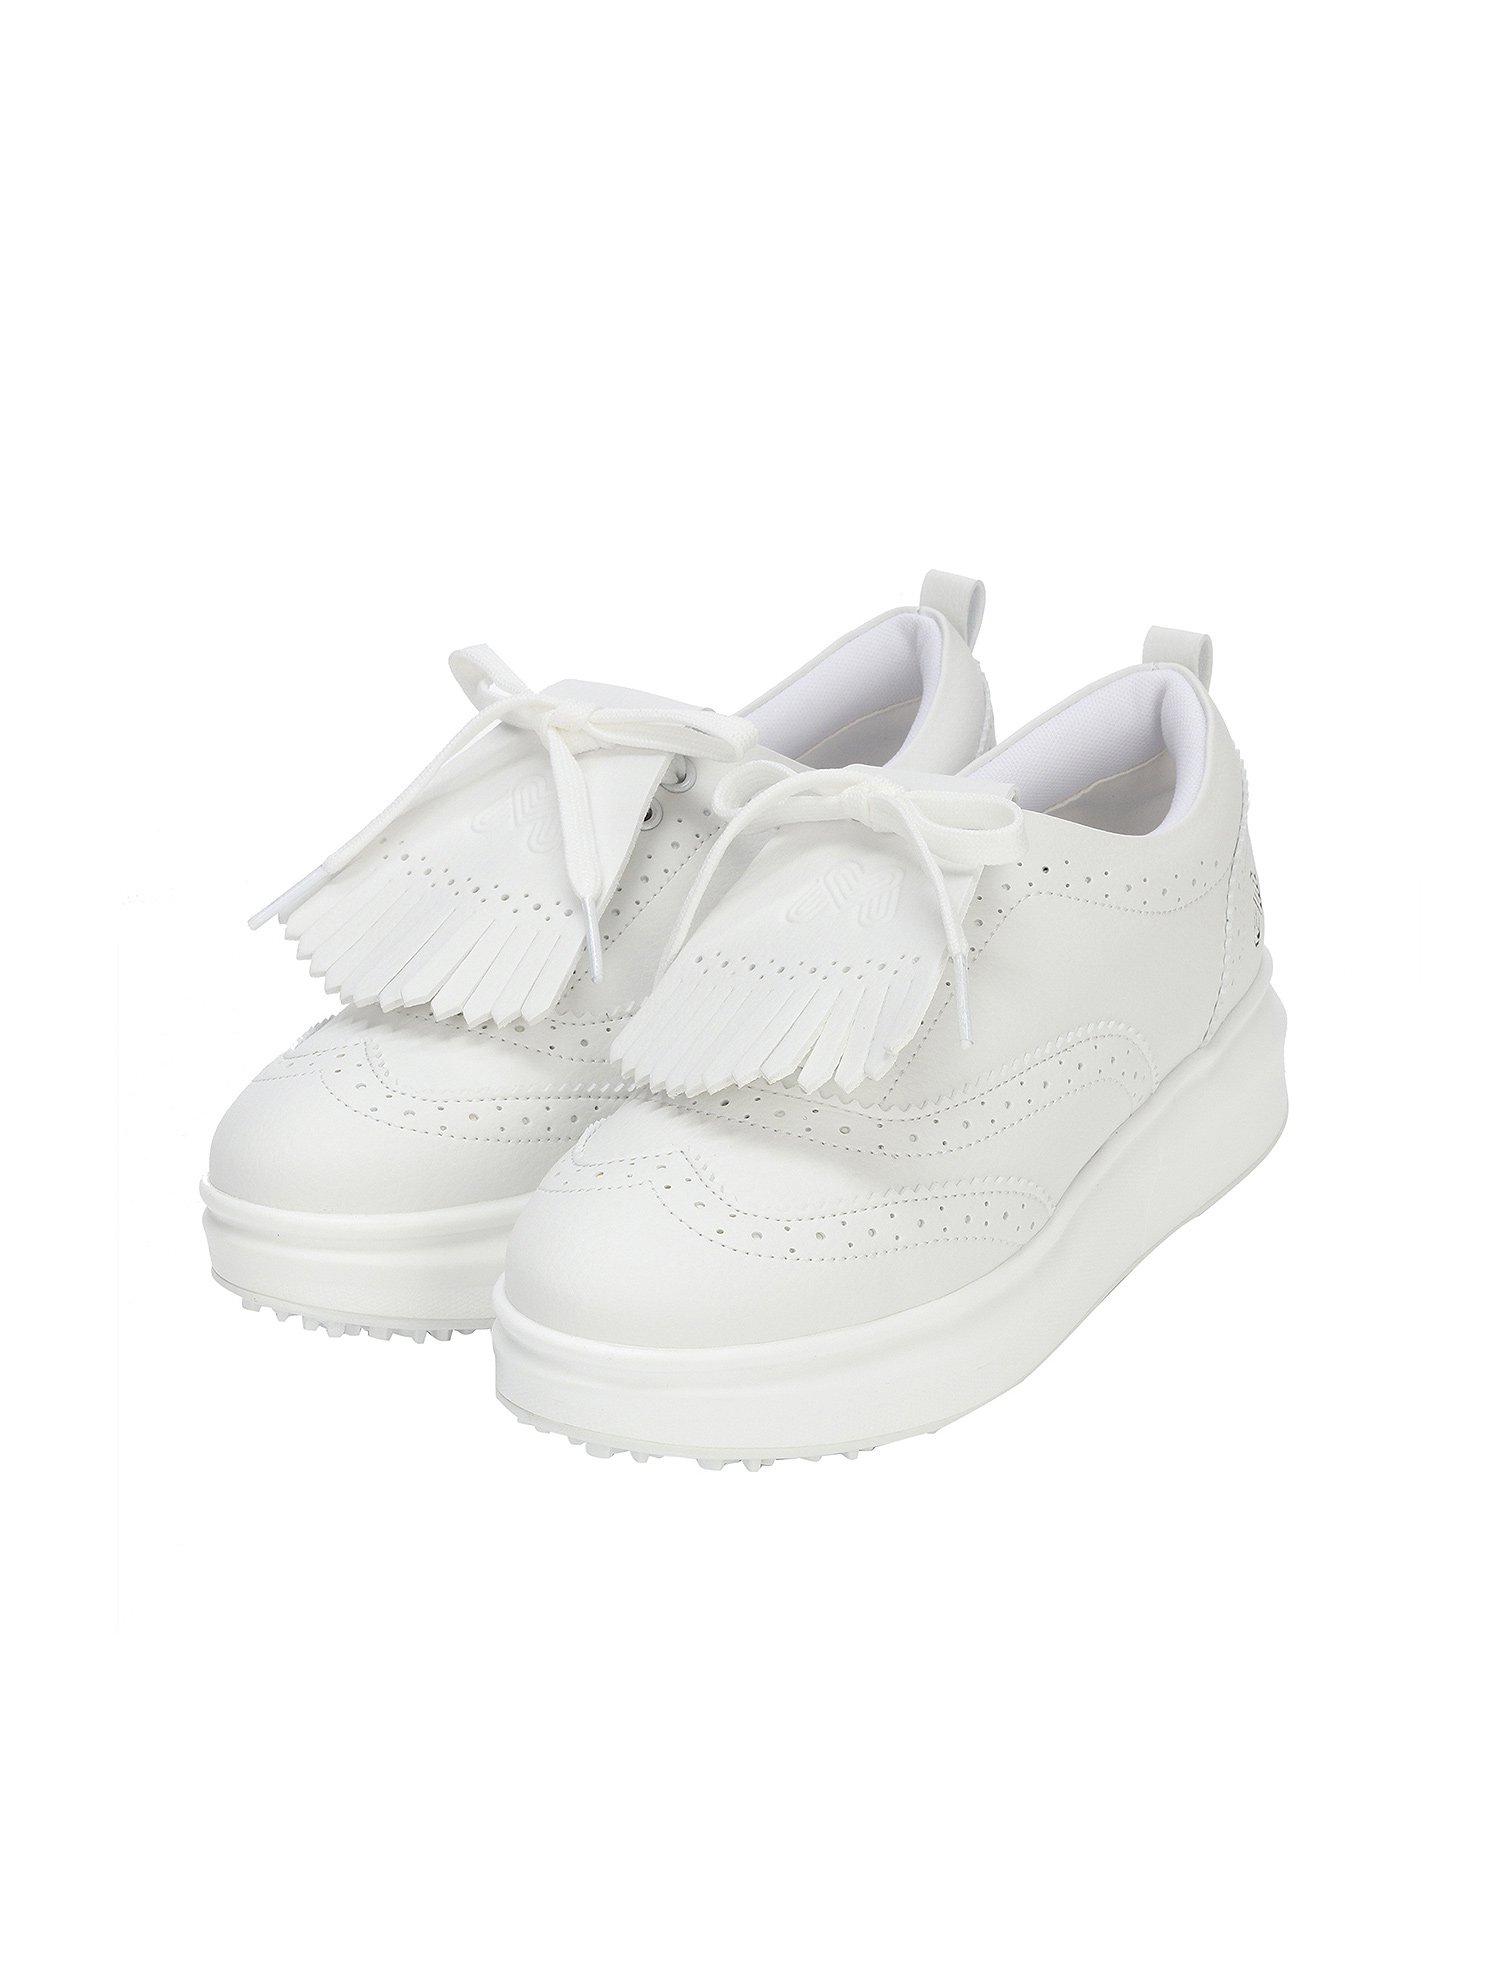 Tassel Spikeless Sneakers_White (QWAESH00131)